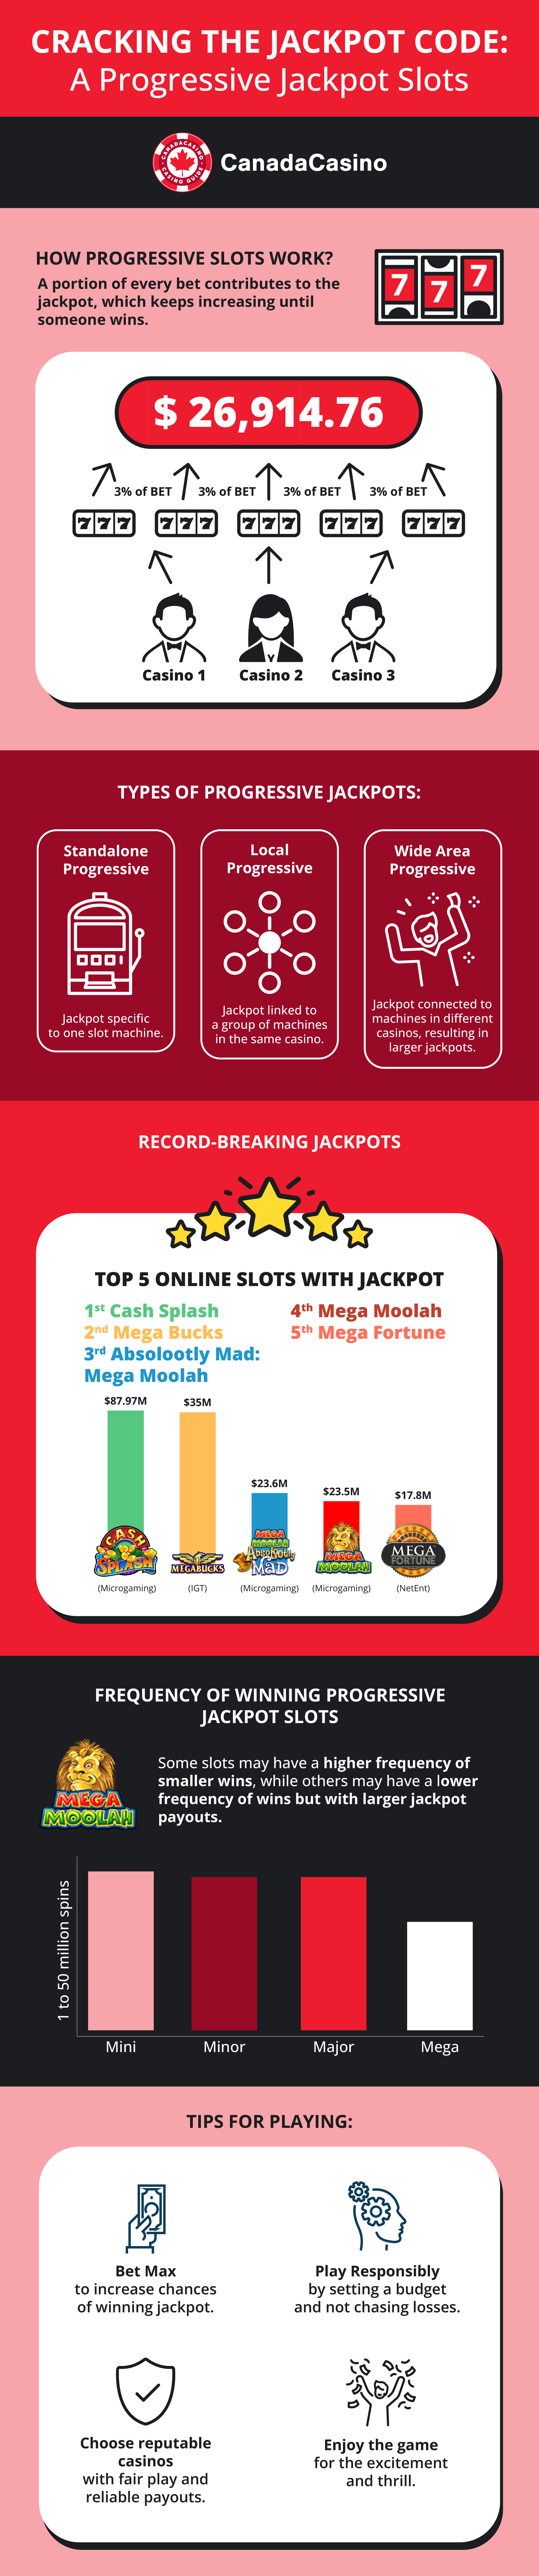 progressive jackpot slots canada casino guides